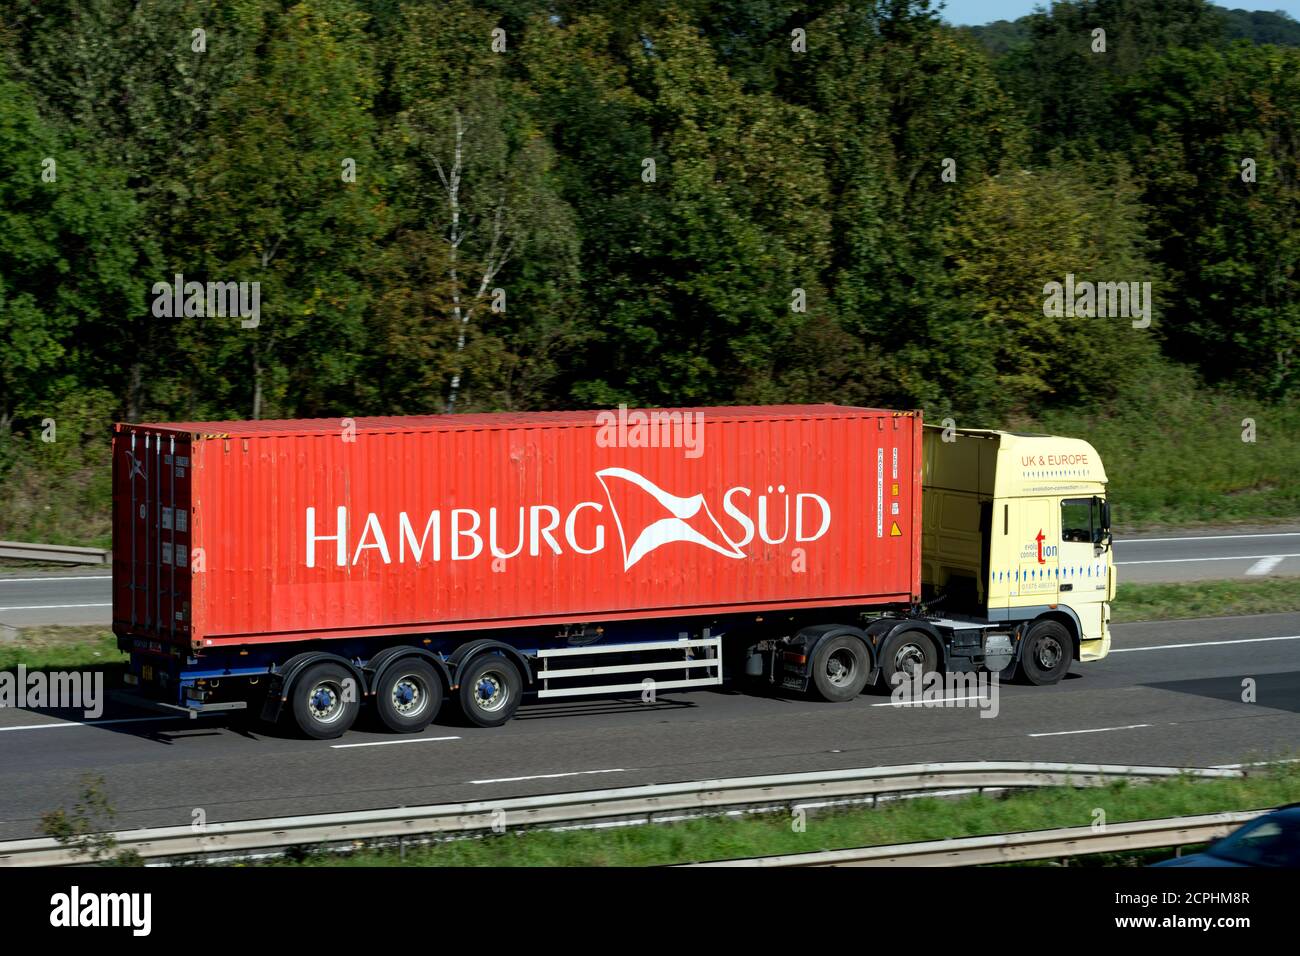 Hamburg Sud shipping container transported on the M40 motorway, Warwickshire, UK Stock Photo